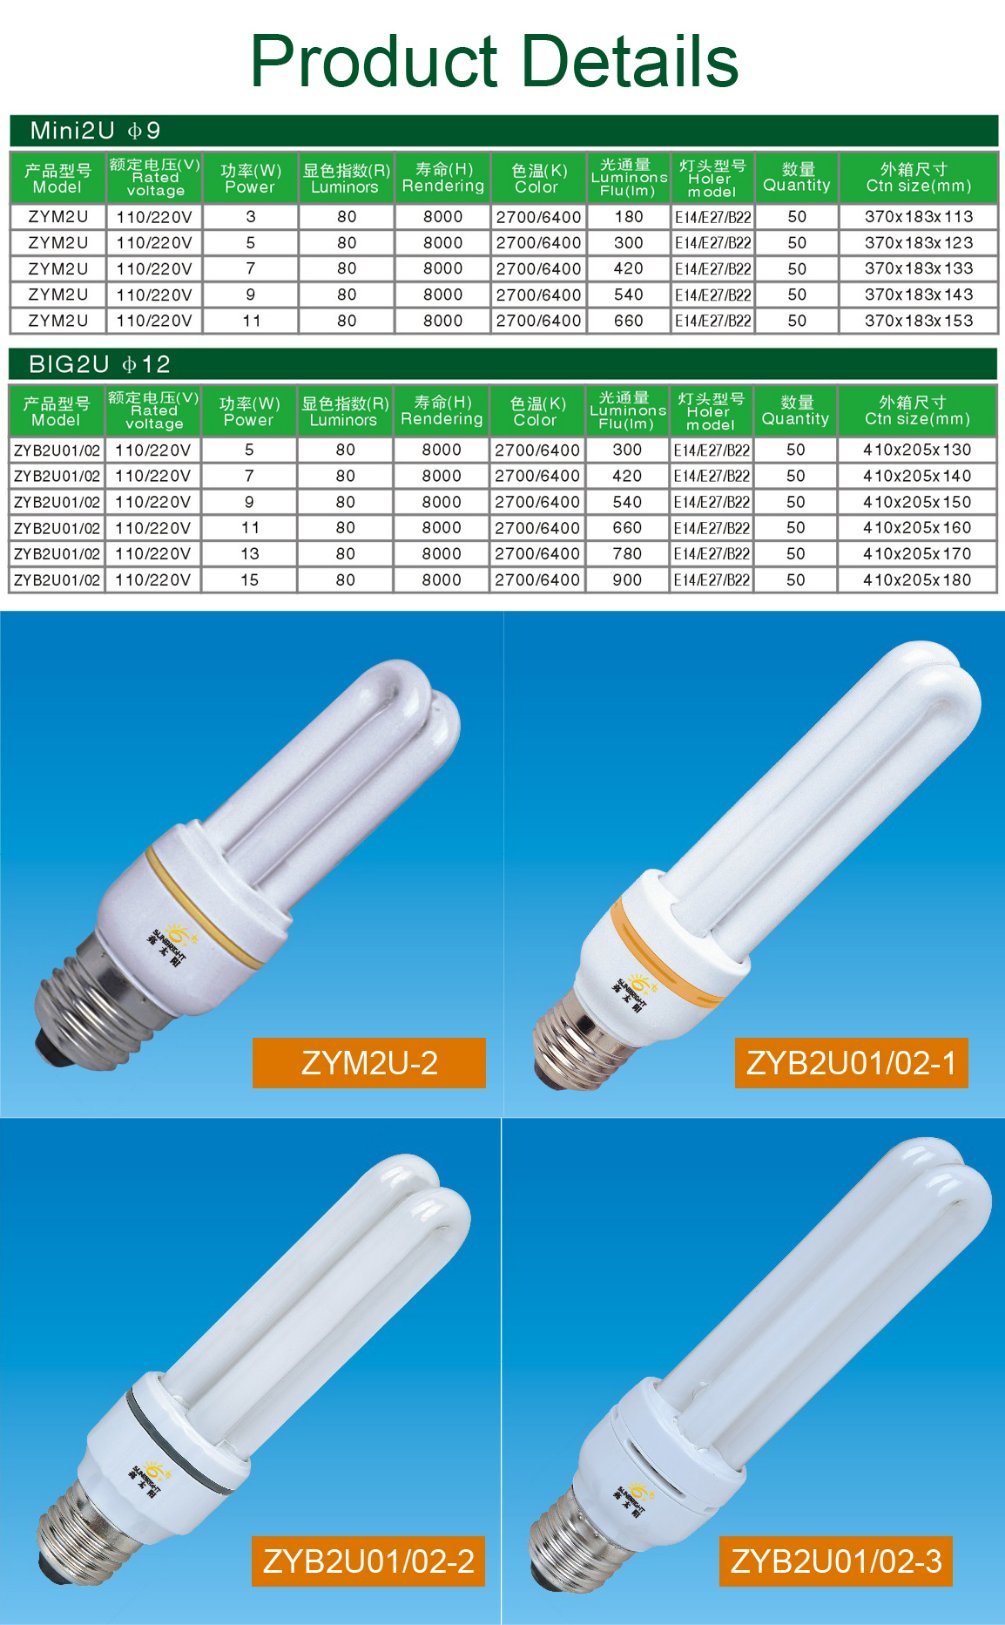 Quality Big 3u T4 15W E27 Energy Saving Lamp Bulb